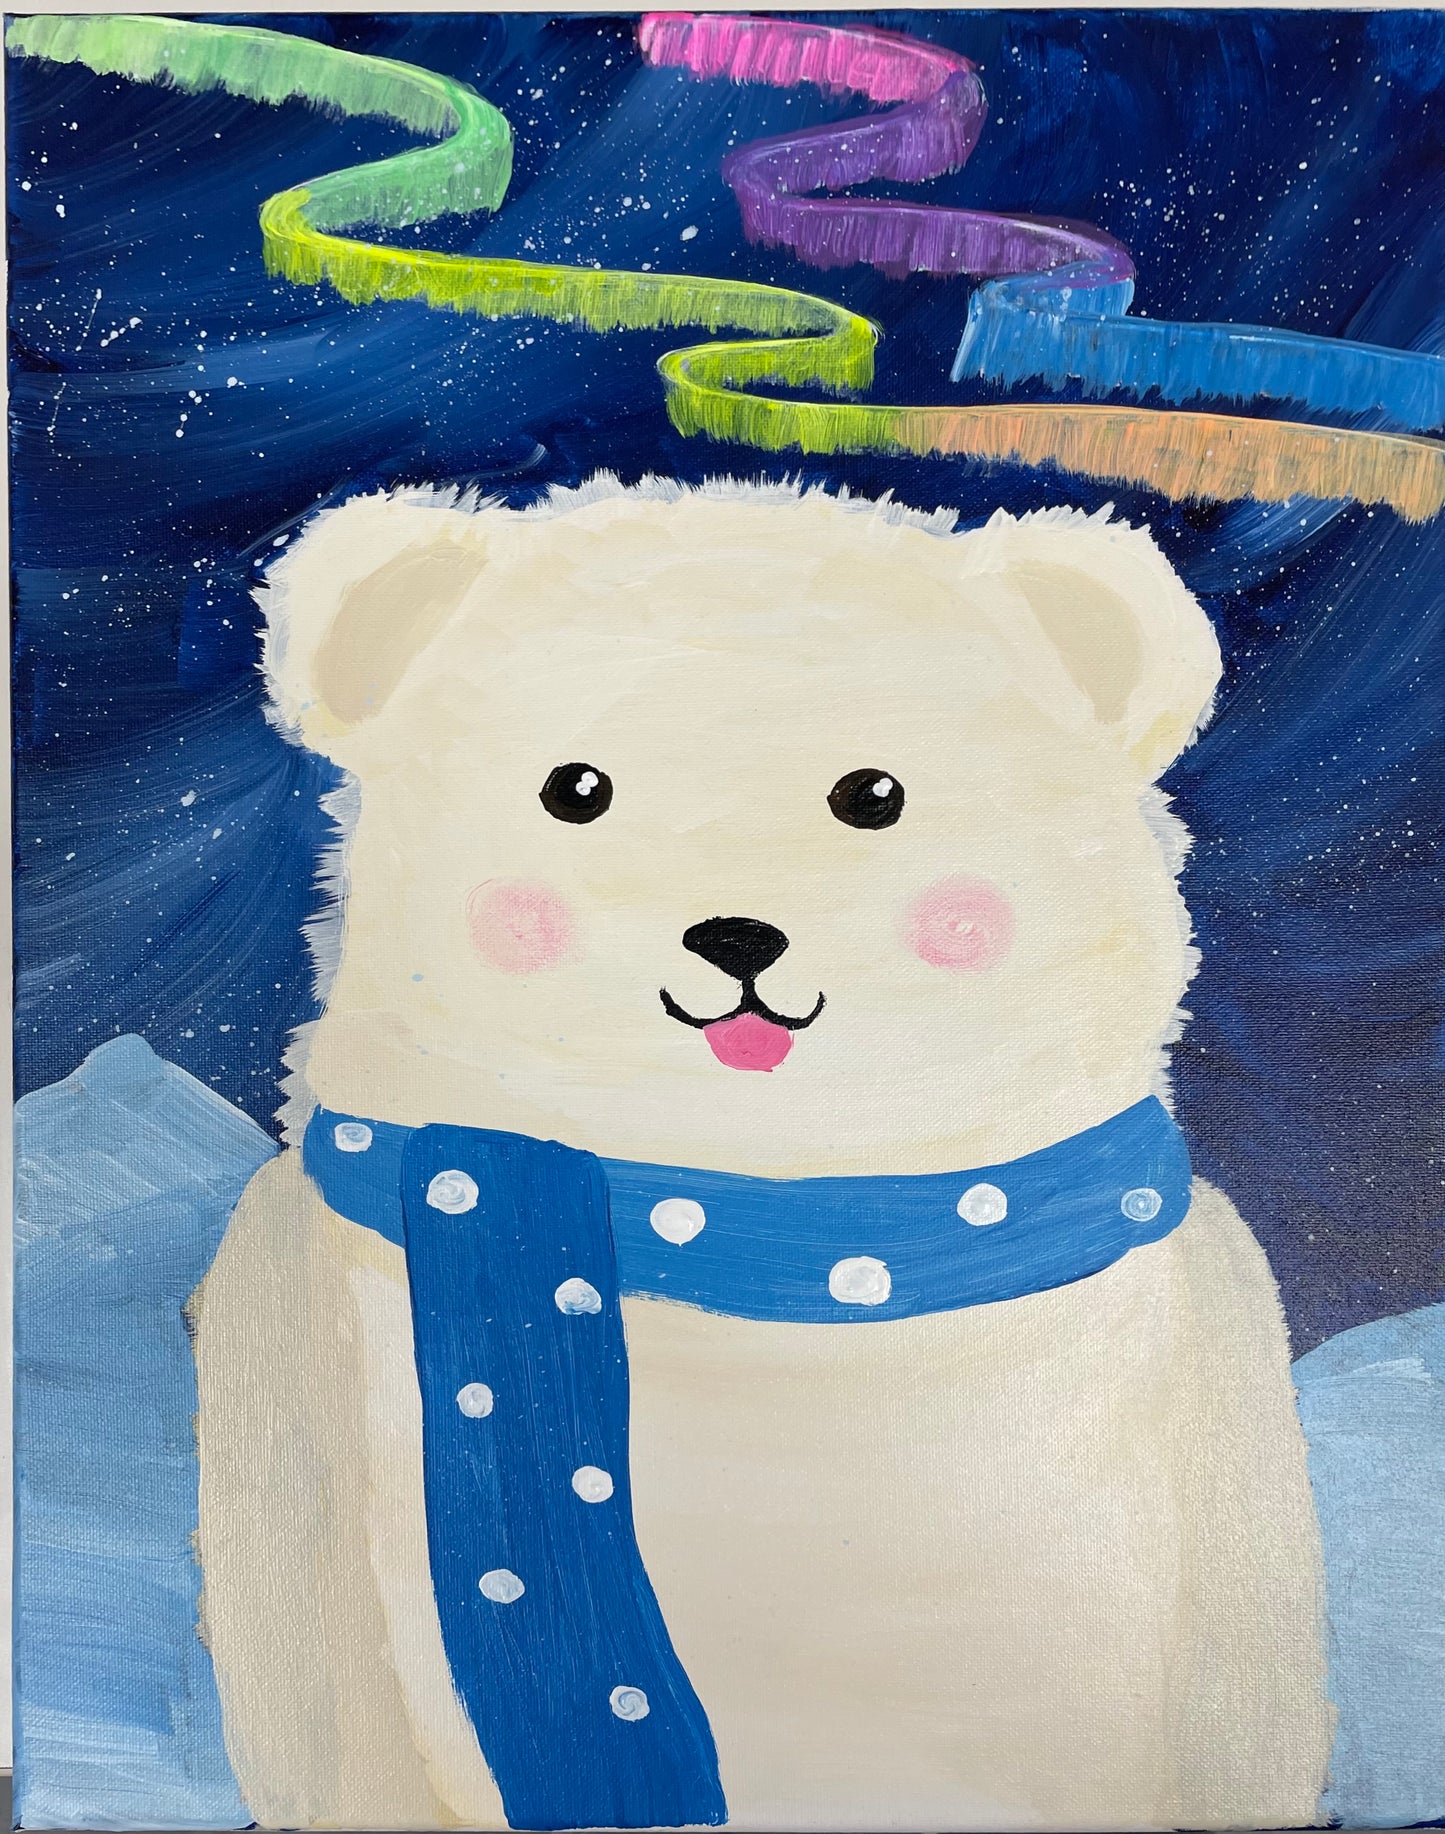 Wed, Dec 14th, 4-6P “Polar Lights" Public Houston Kids Painting Class